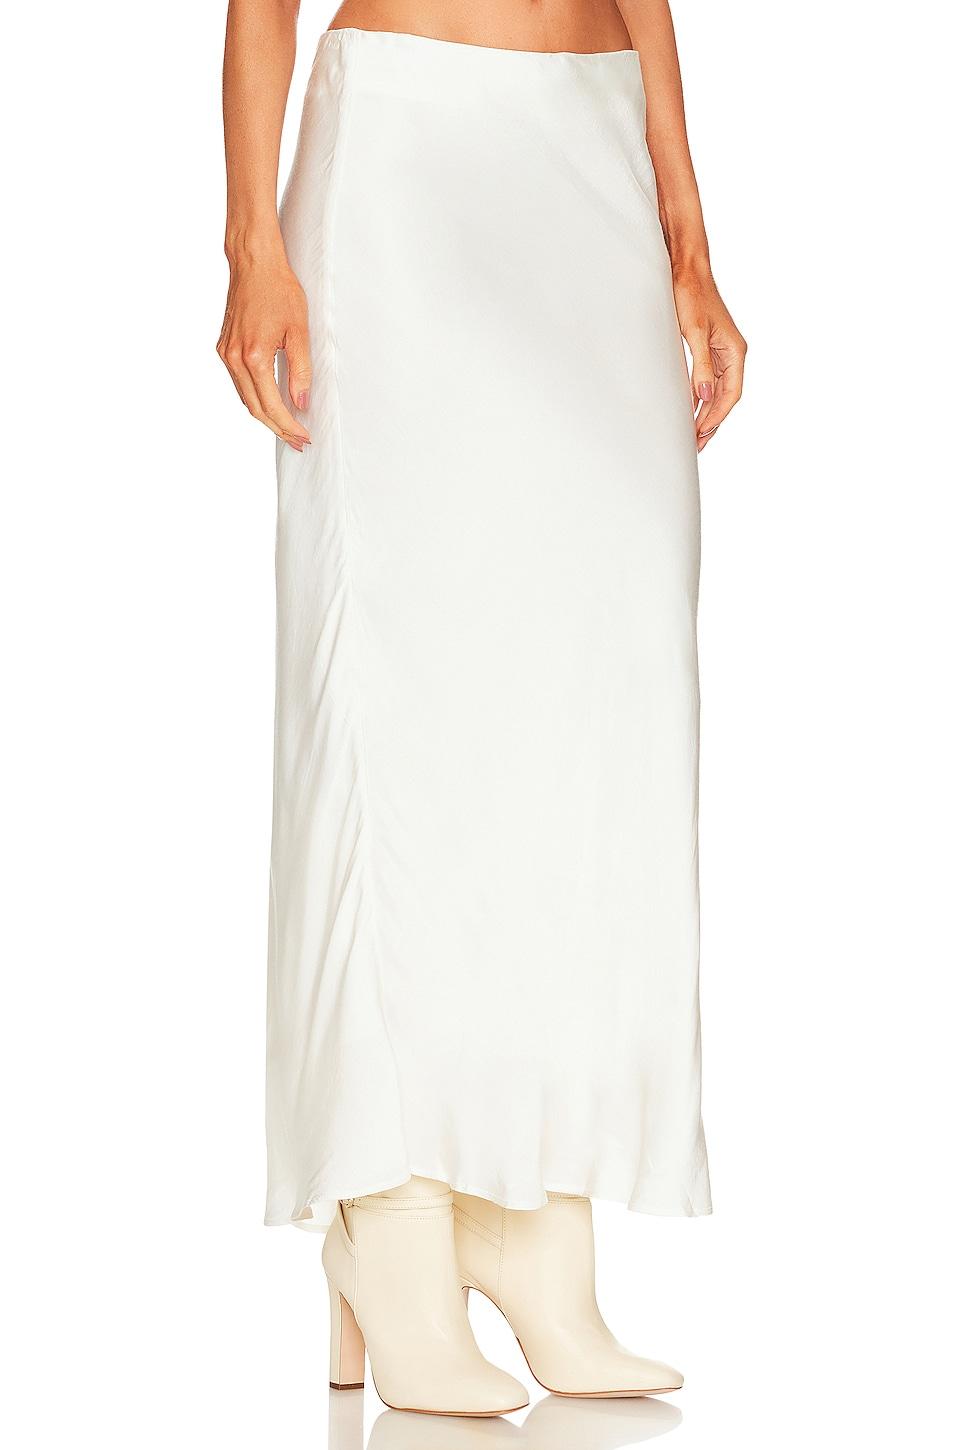 Bardot Azzura Satin Skirt in White | Lyst